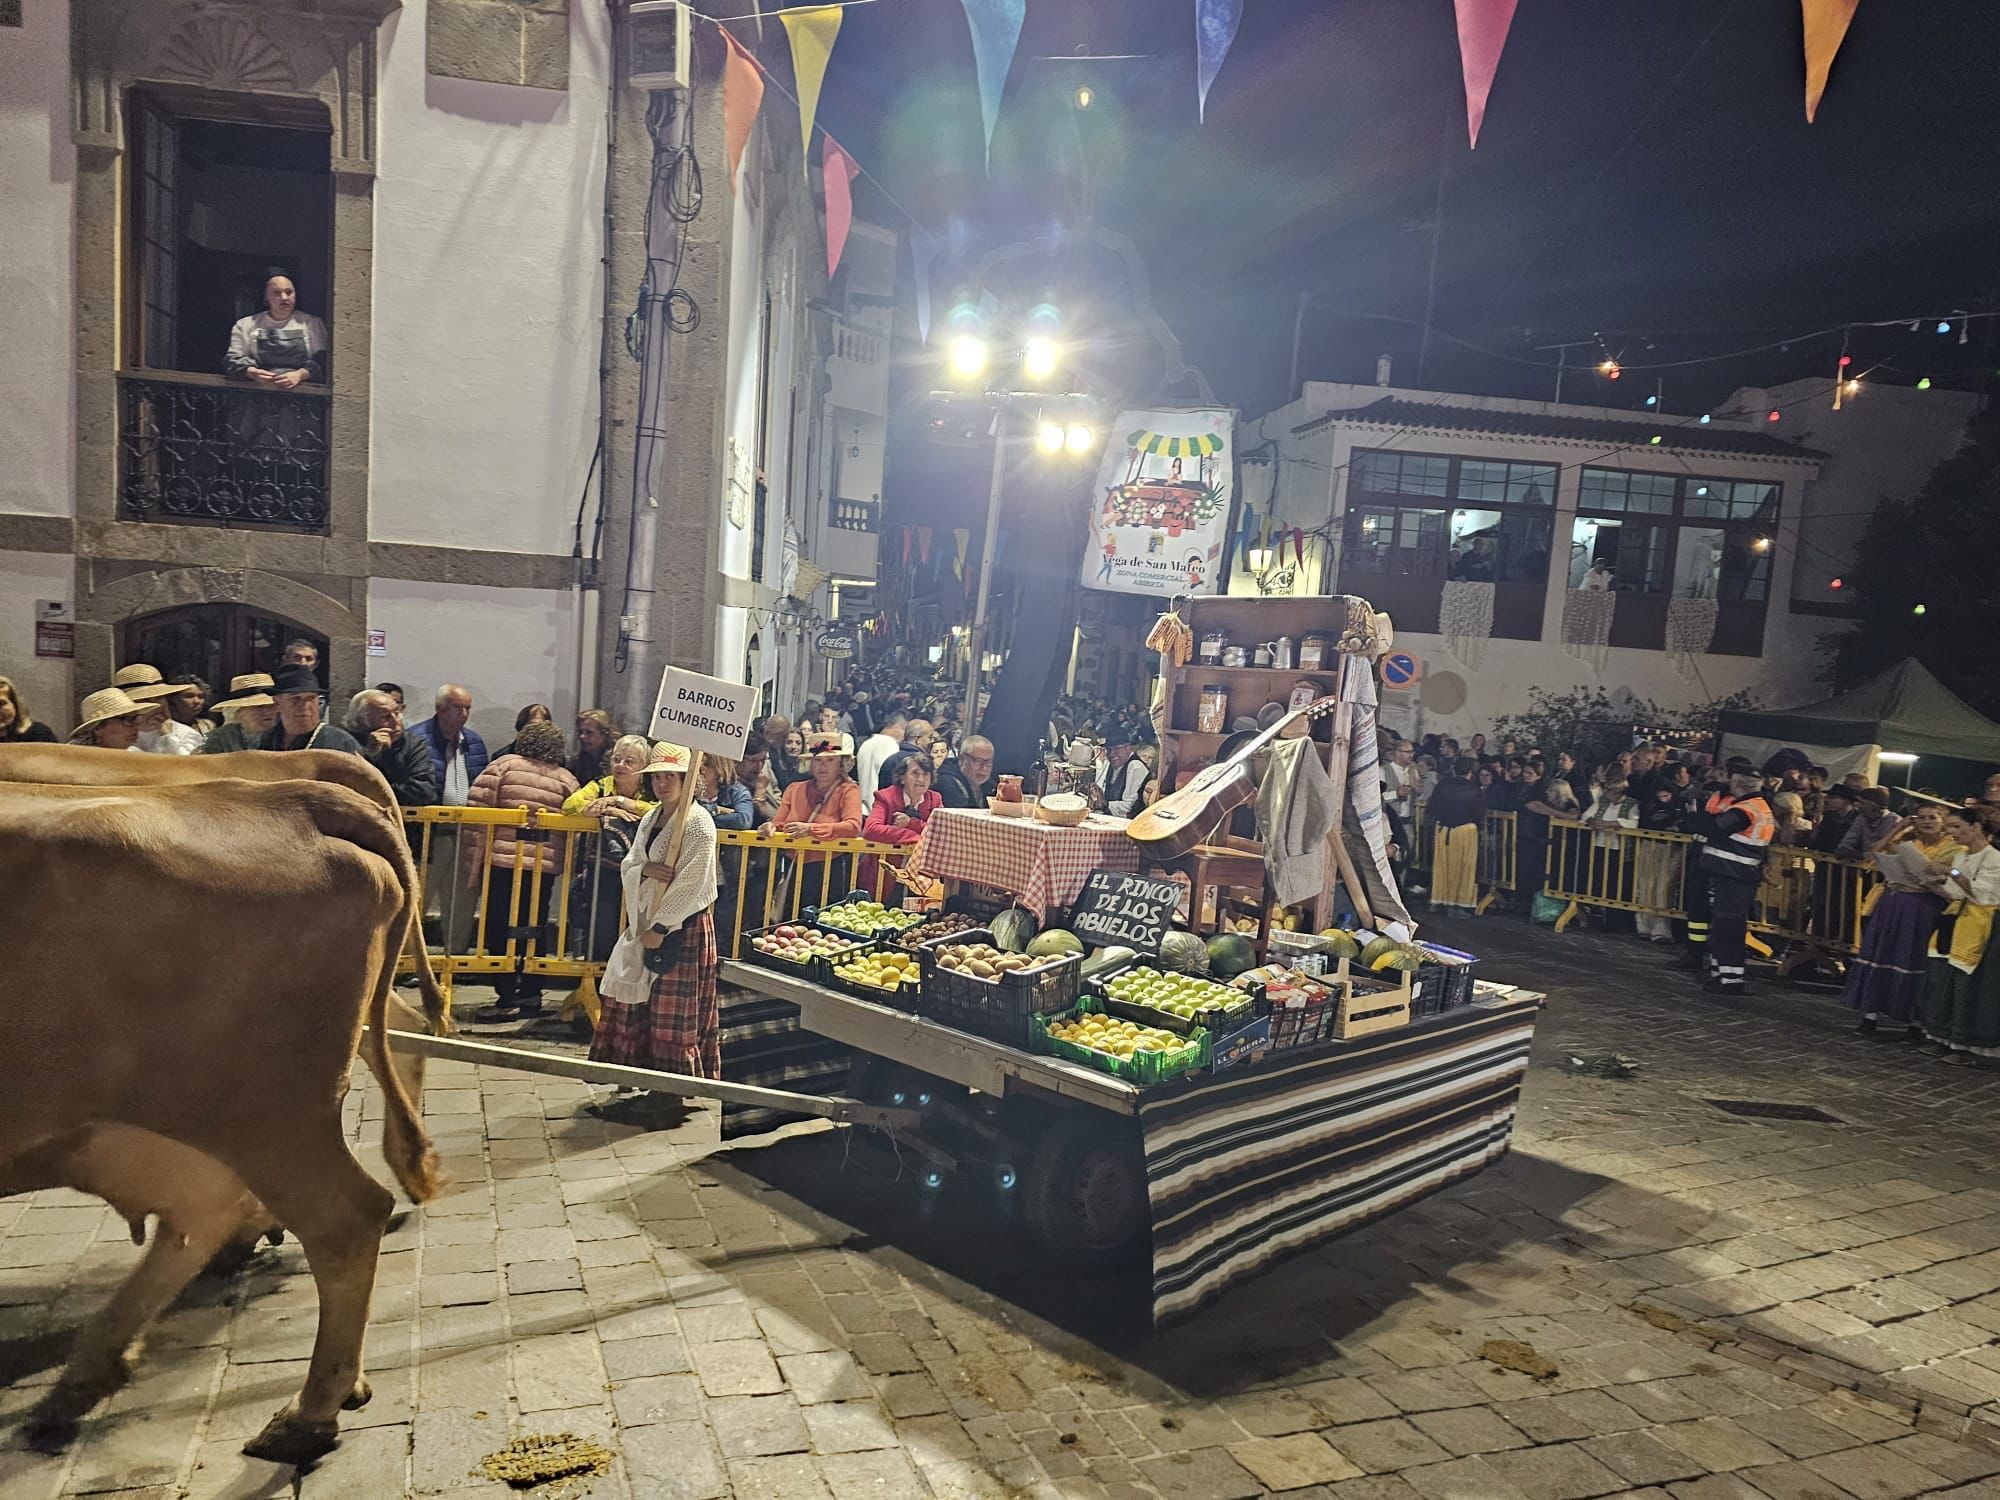 San Mateo celebra su romería al estilo tradicional